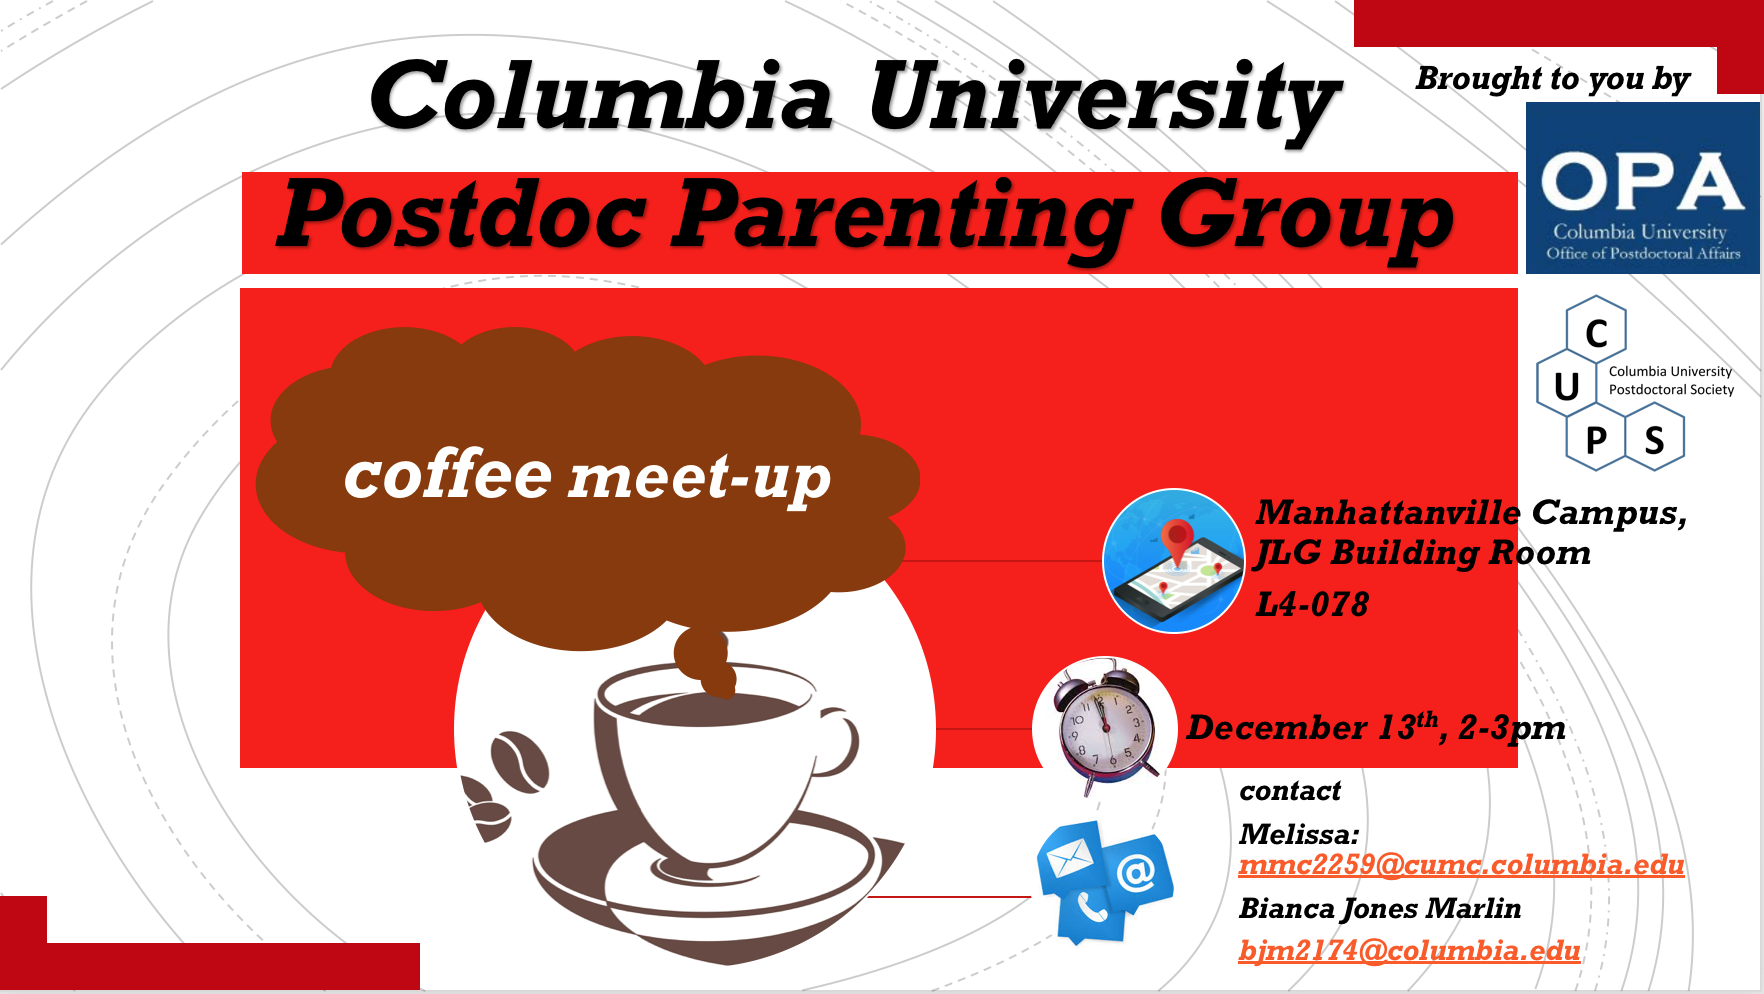 postdoc-parenting-group-meetup-coffee-time-manhattanville-december-2018 